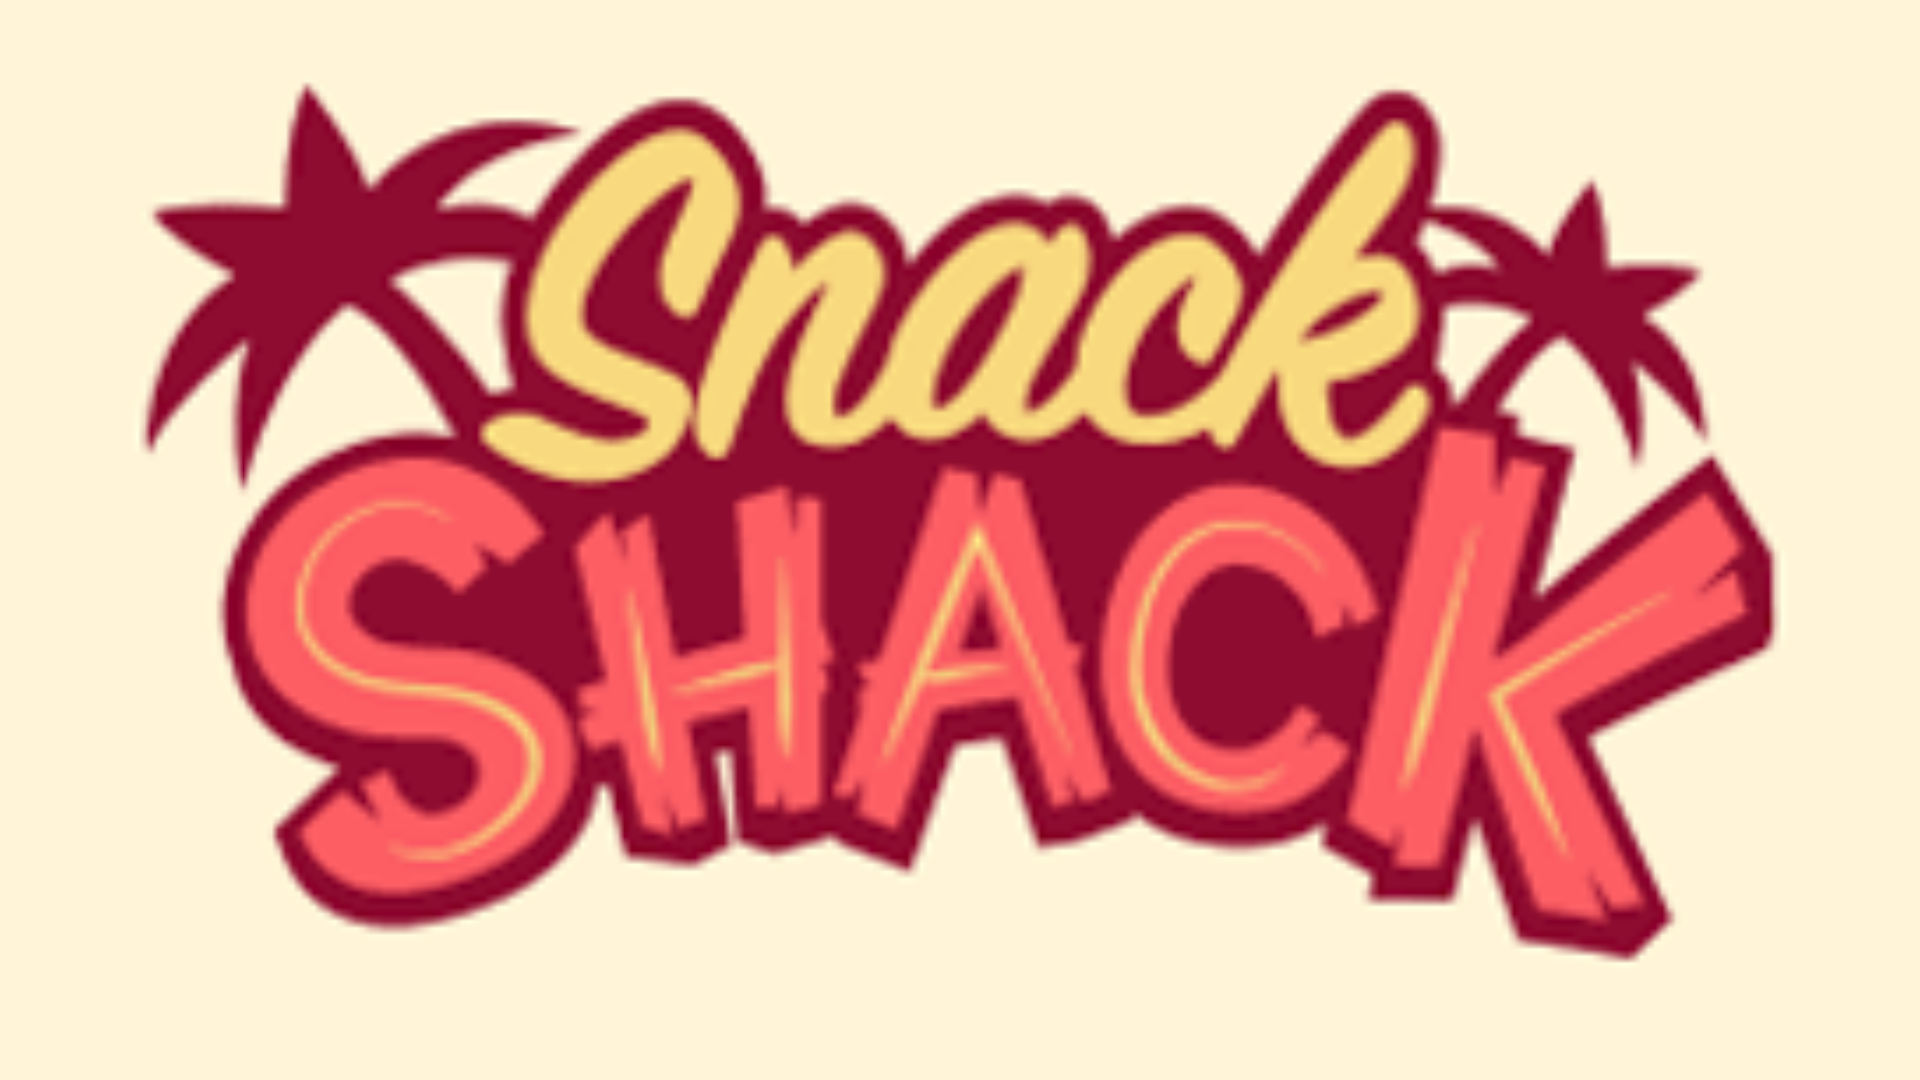 MSOS Snack Shack is back!